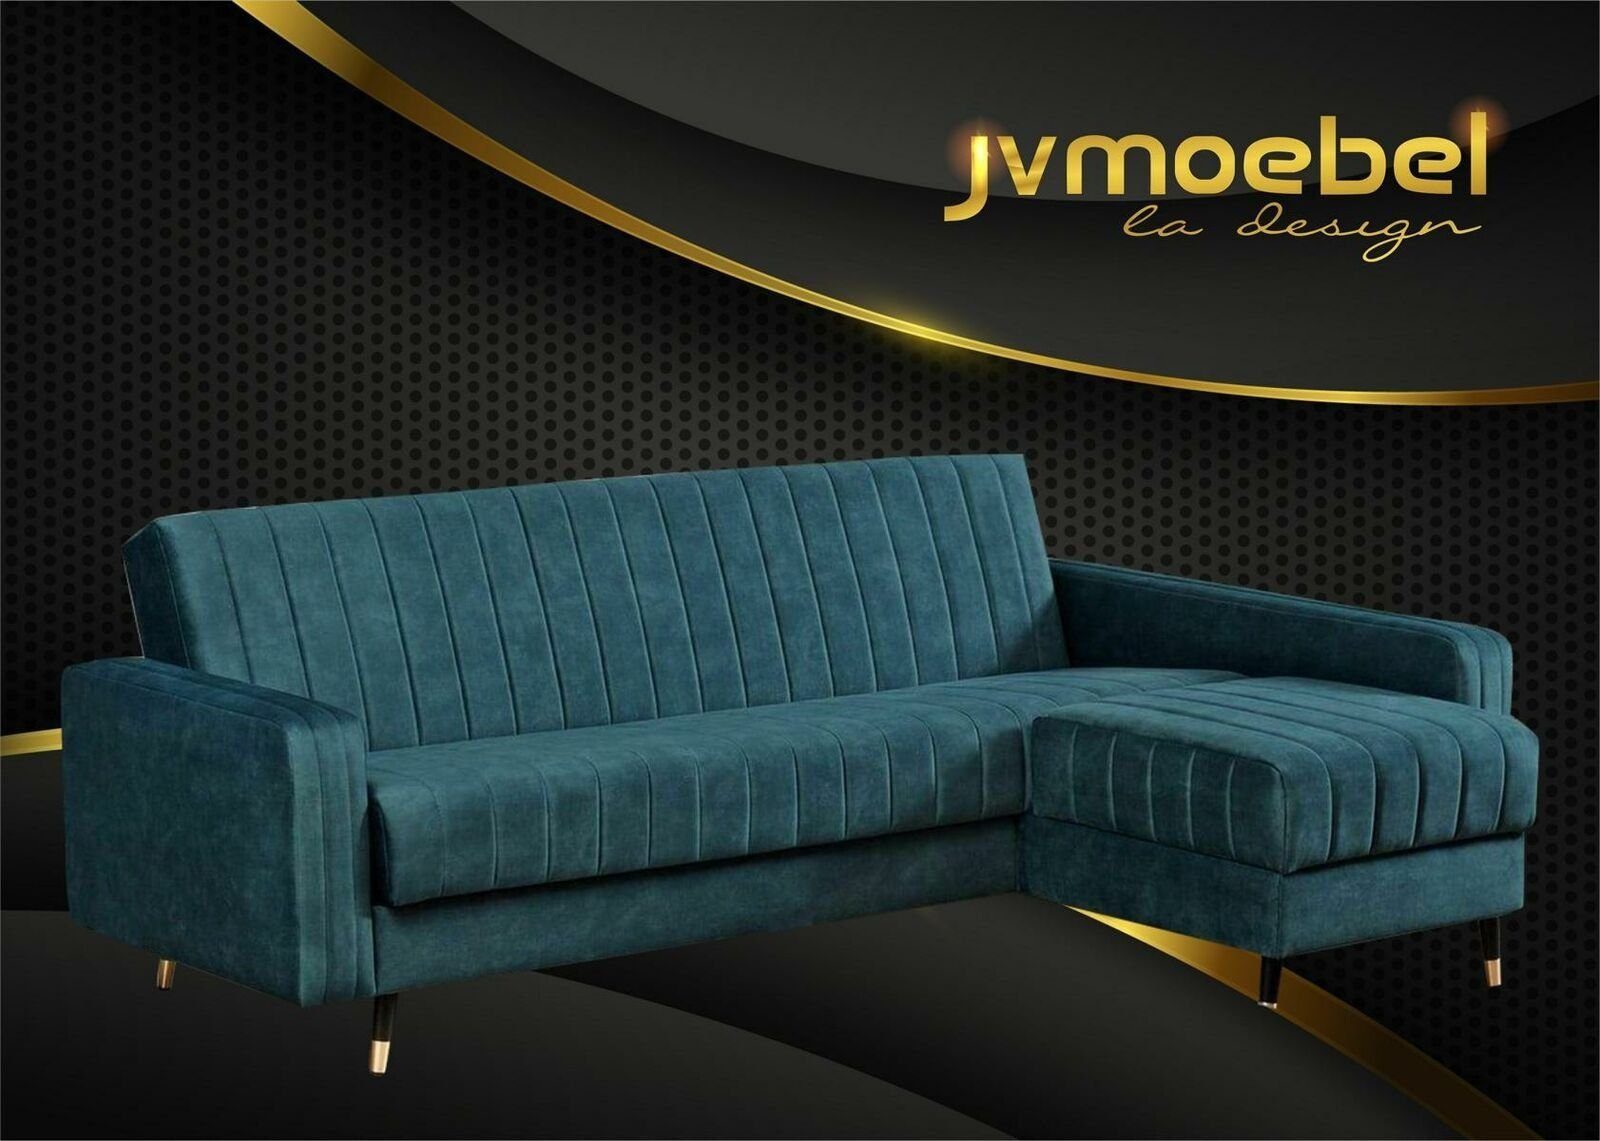 JVmoebel Ecksofa, Design Luxus Eckcouch Sofa Couchen Polster Eck Garnitur Blau